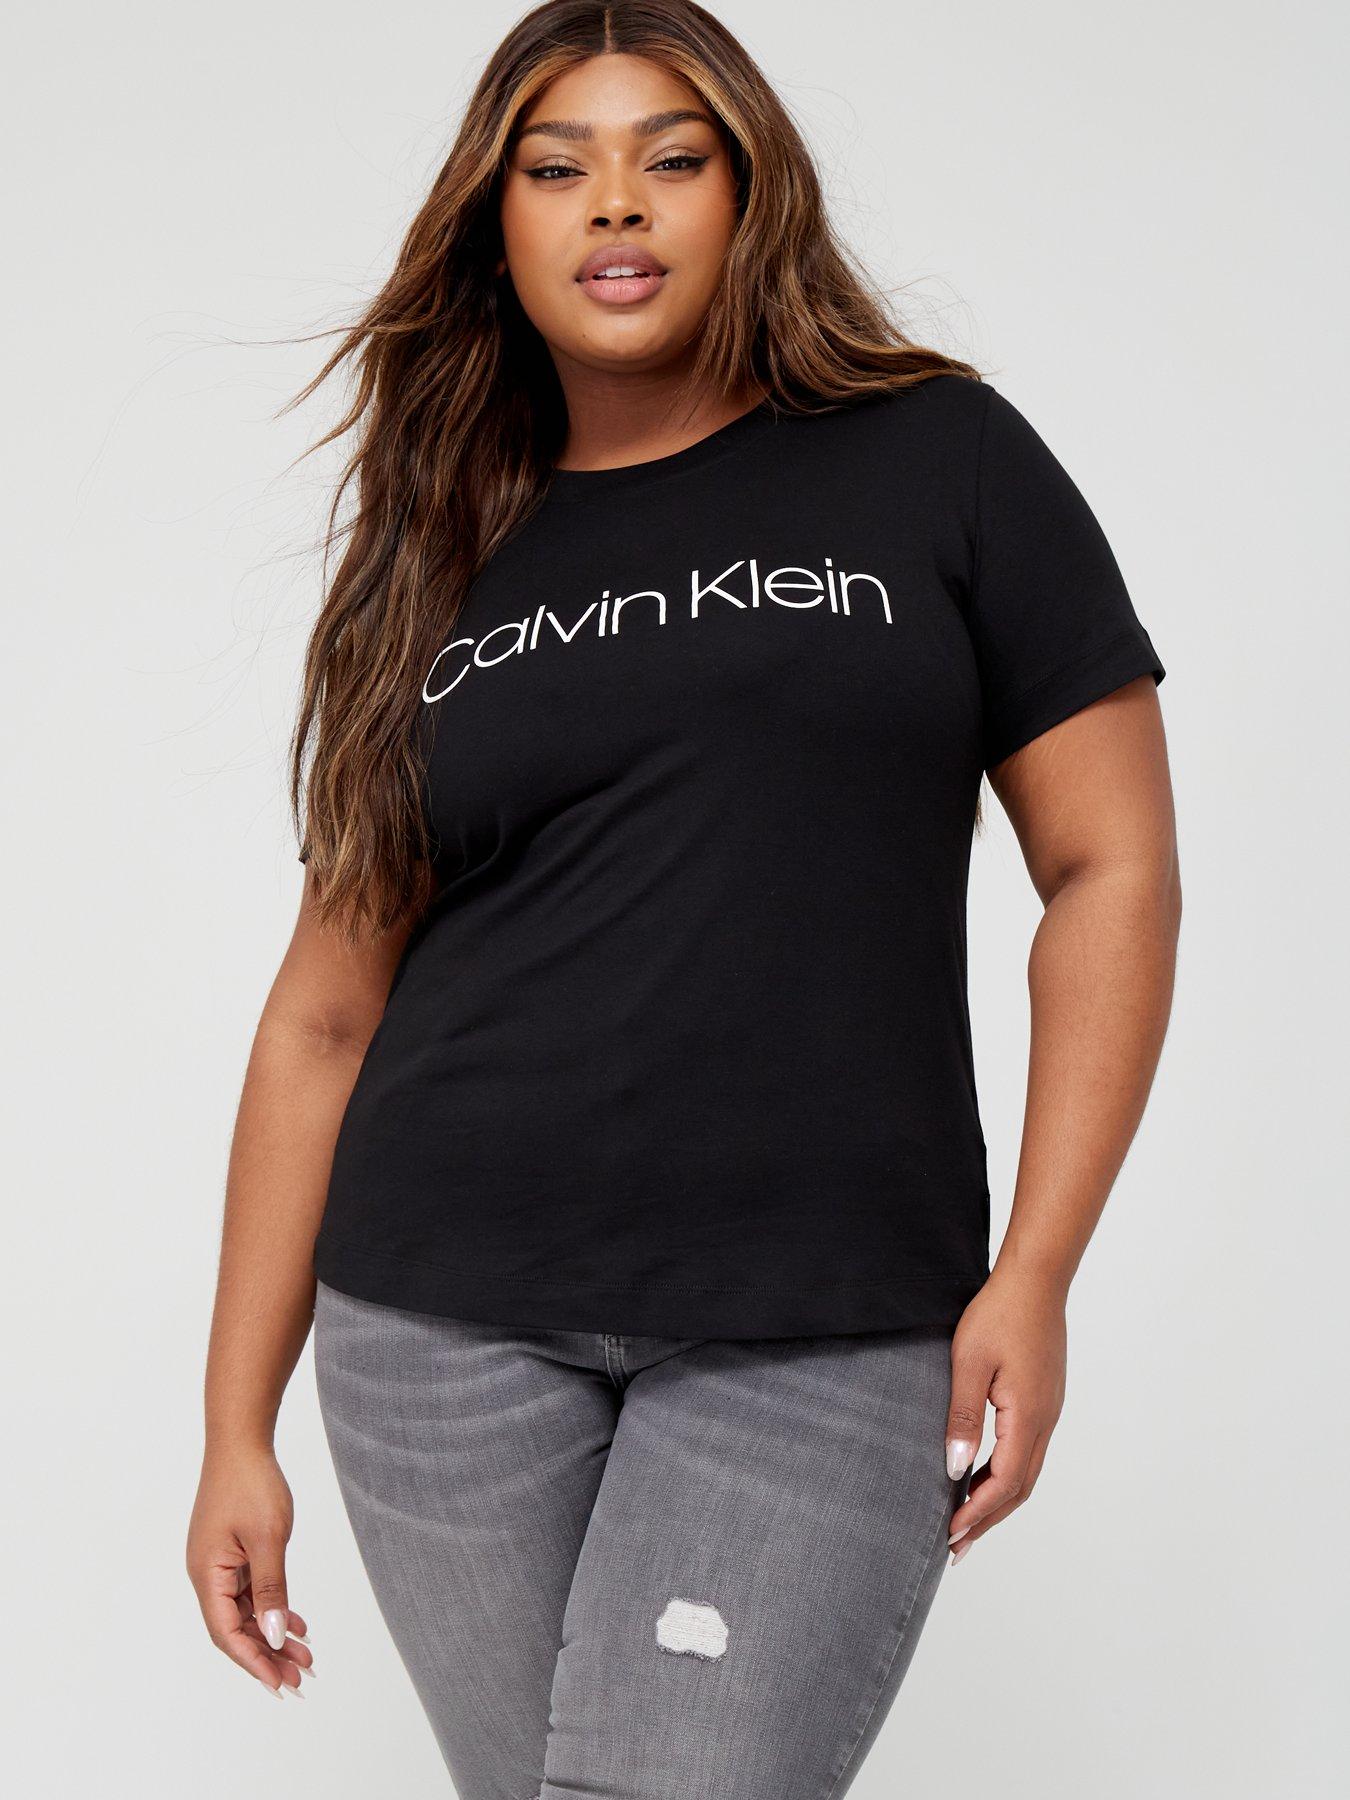 Fashion Calvin Klein CALVIN KLEIN Womens Graphic T-Shirt Top UK 12 Medium  Black Cotton EA08 